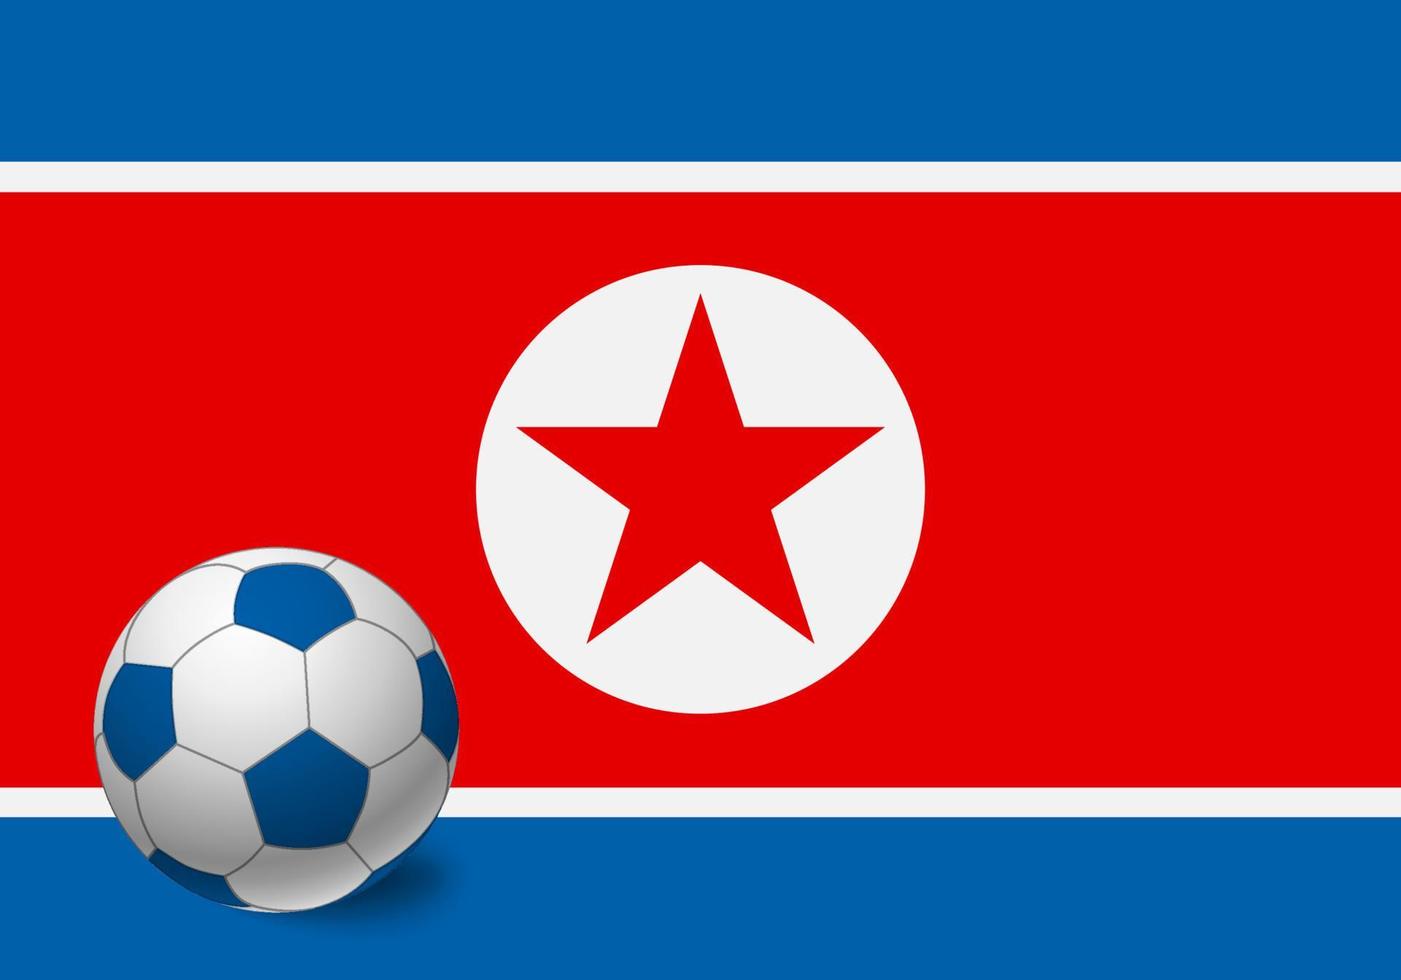 North Korea flag and soccer ball vector